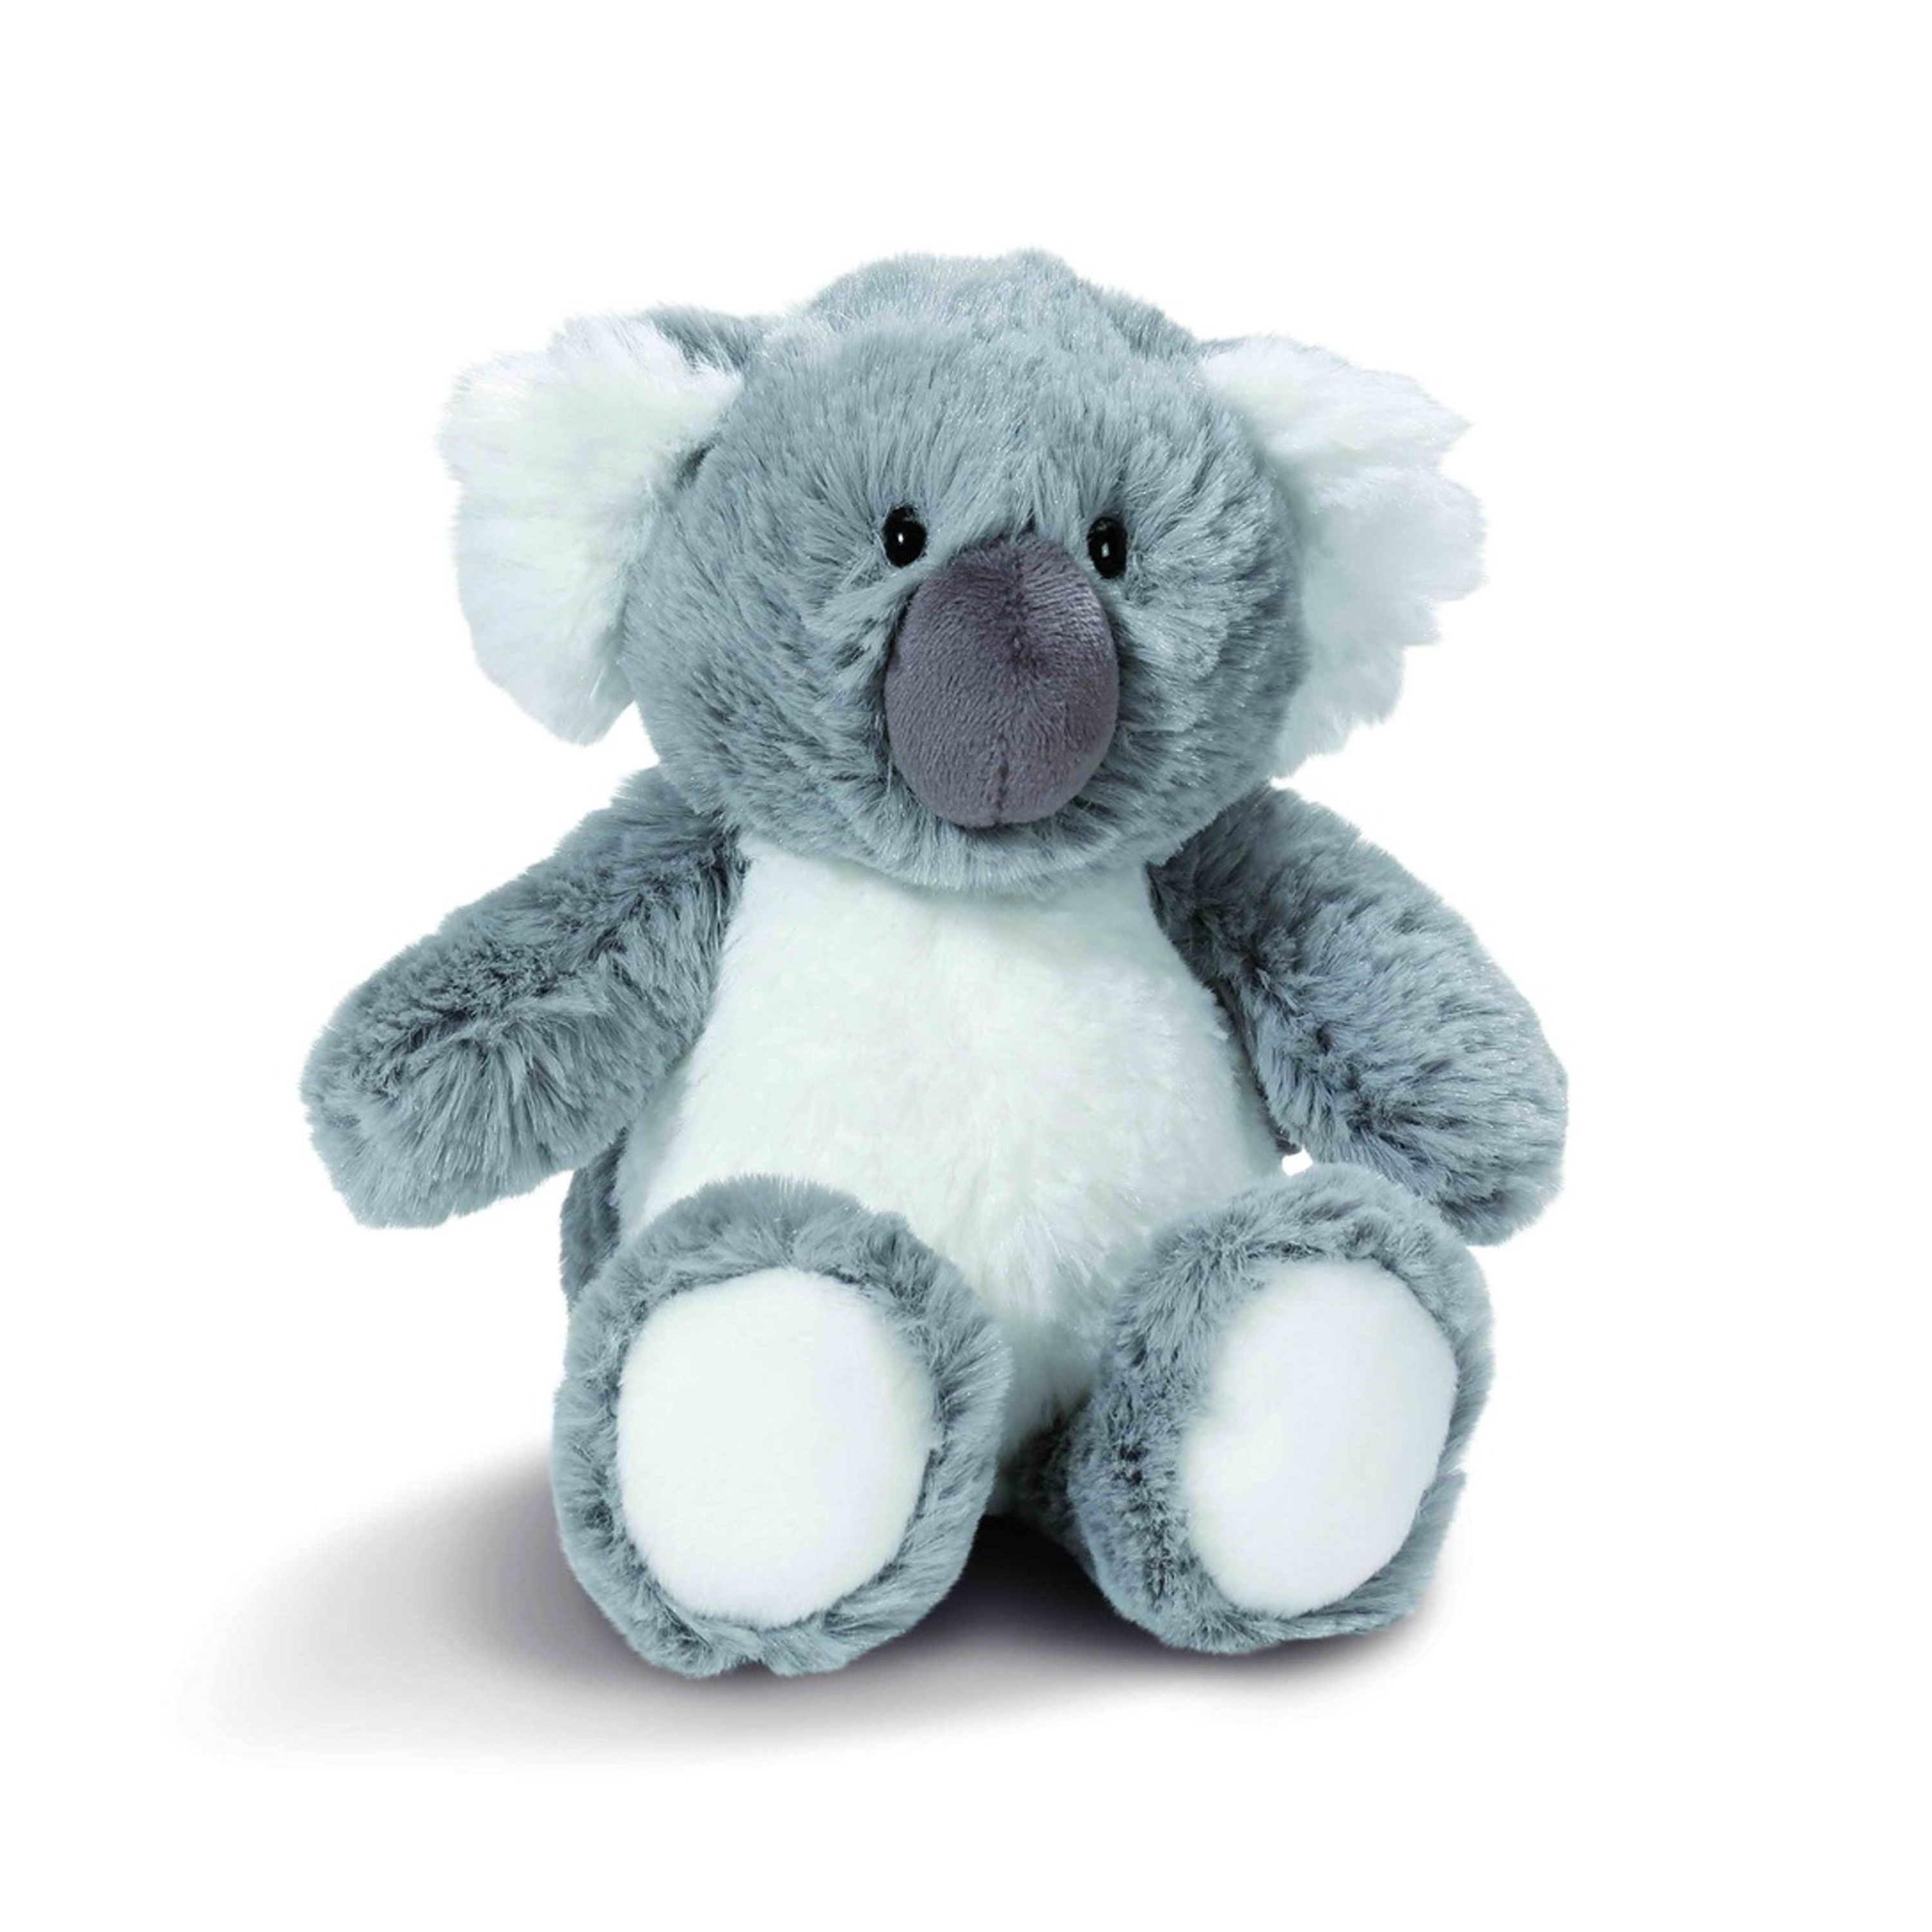 Nici koala pluche knuffel - grijs - 20 cm